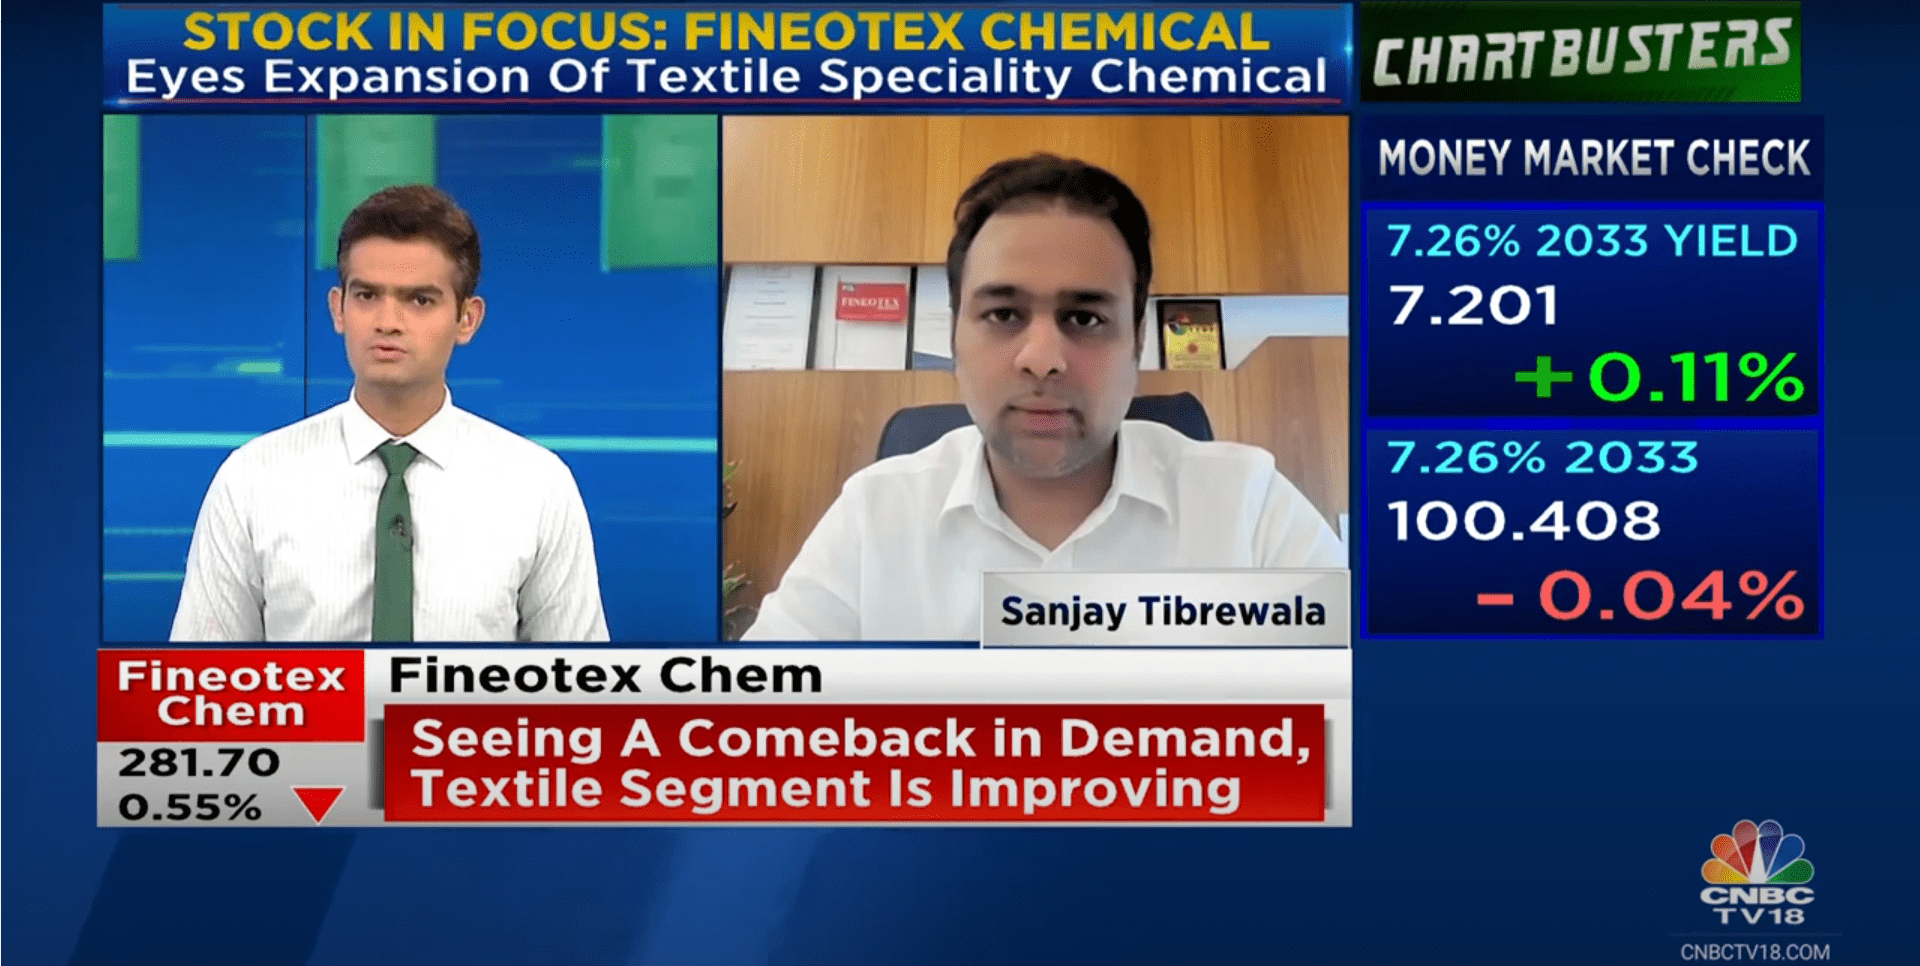 Mr. Sanjay Tibrewala, Director & CFO of Fineotex Chemical Limited, speaks to CNBC TV18